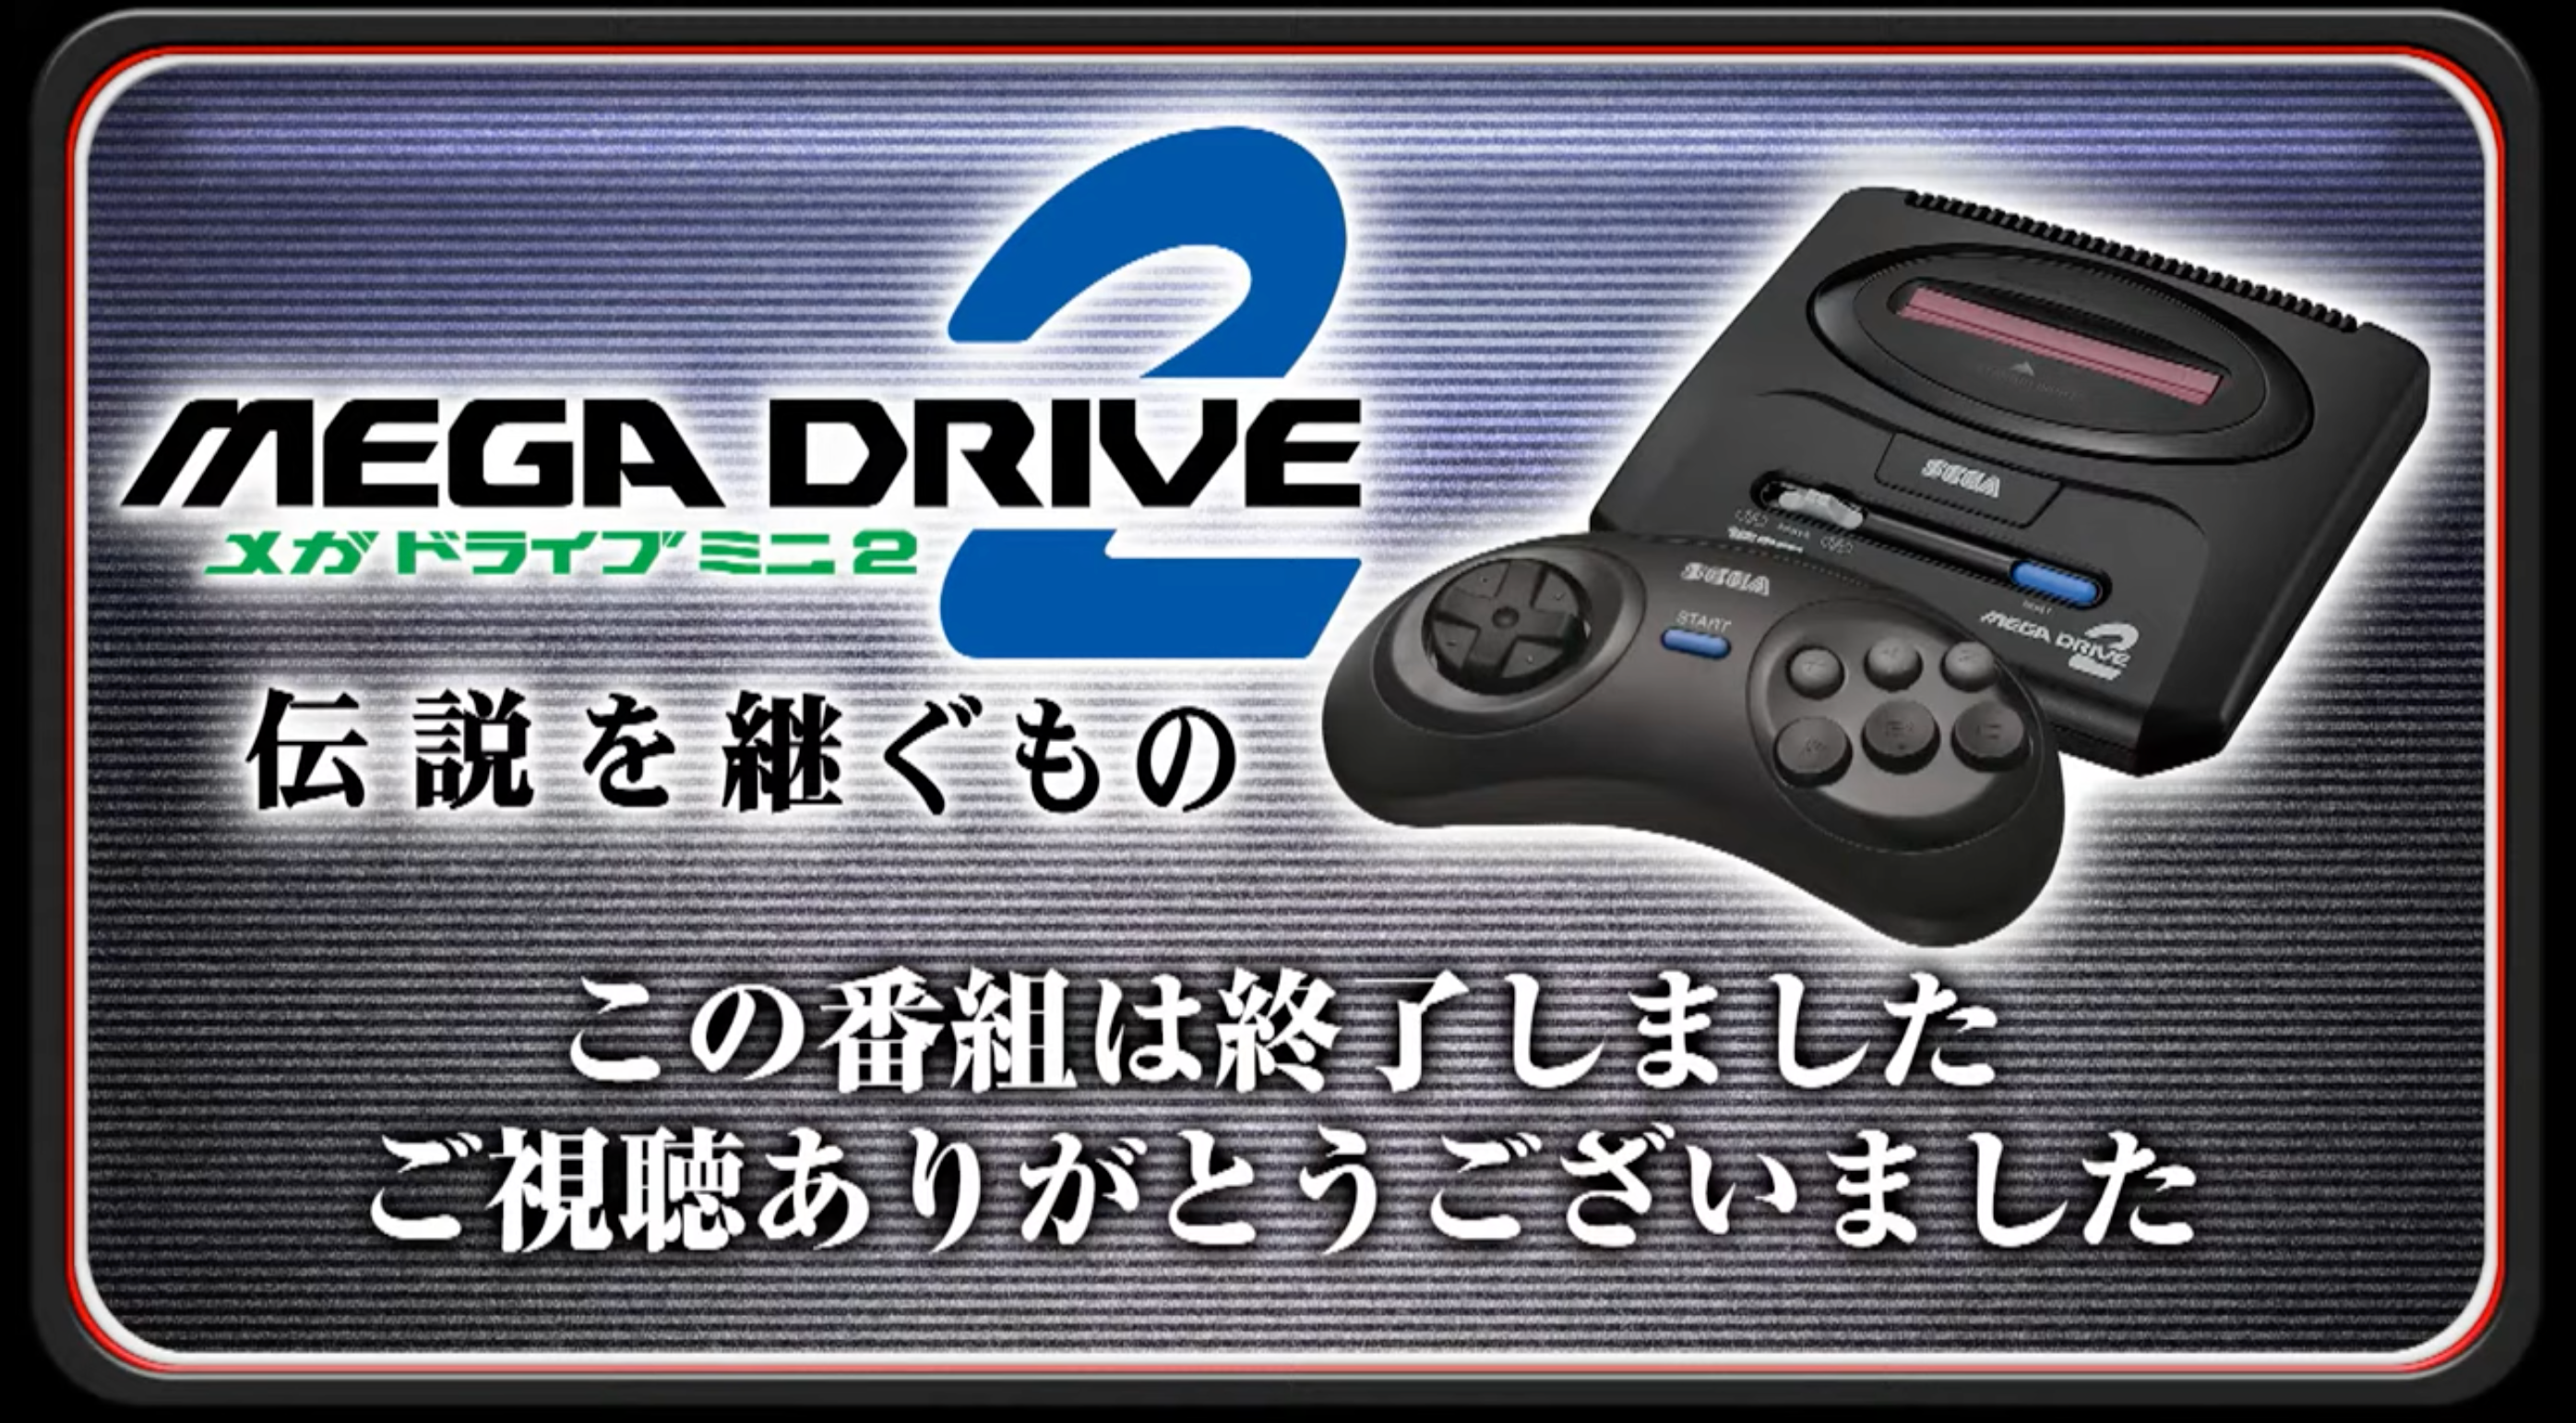 Sega memperkenalkan Mega Drive Mini 2, yang akan mencakup 50 Mega Drive dan game Mega CD